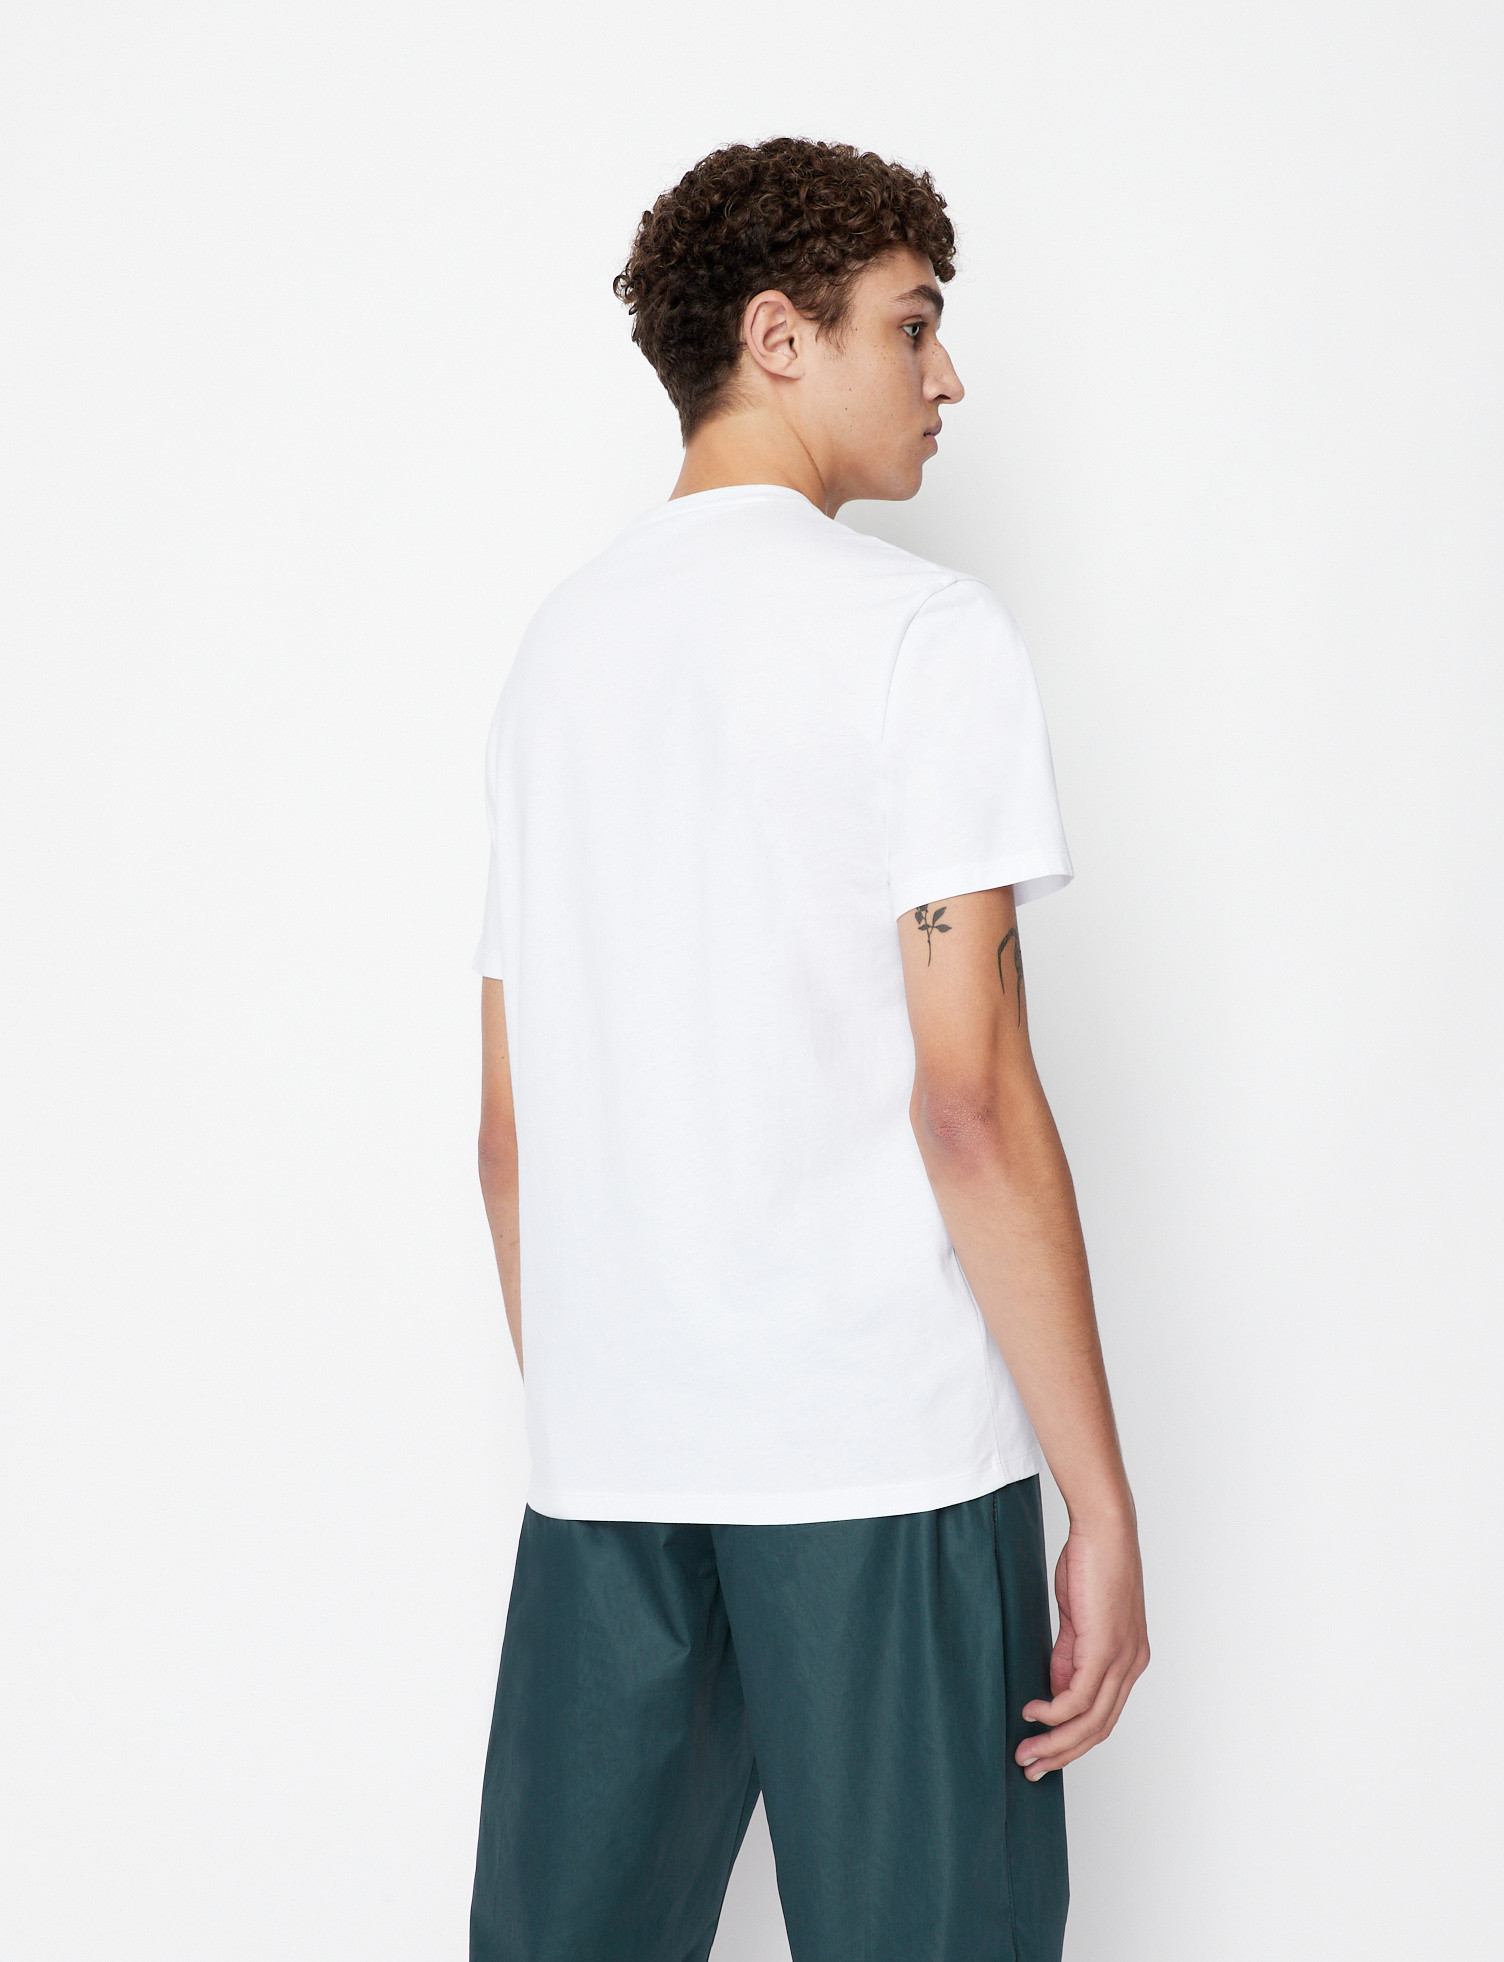 Armani Exchange - Regular fit cotton T-shirt with logo, White, large image number 2